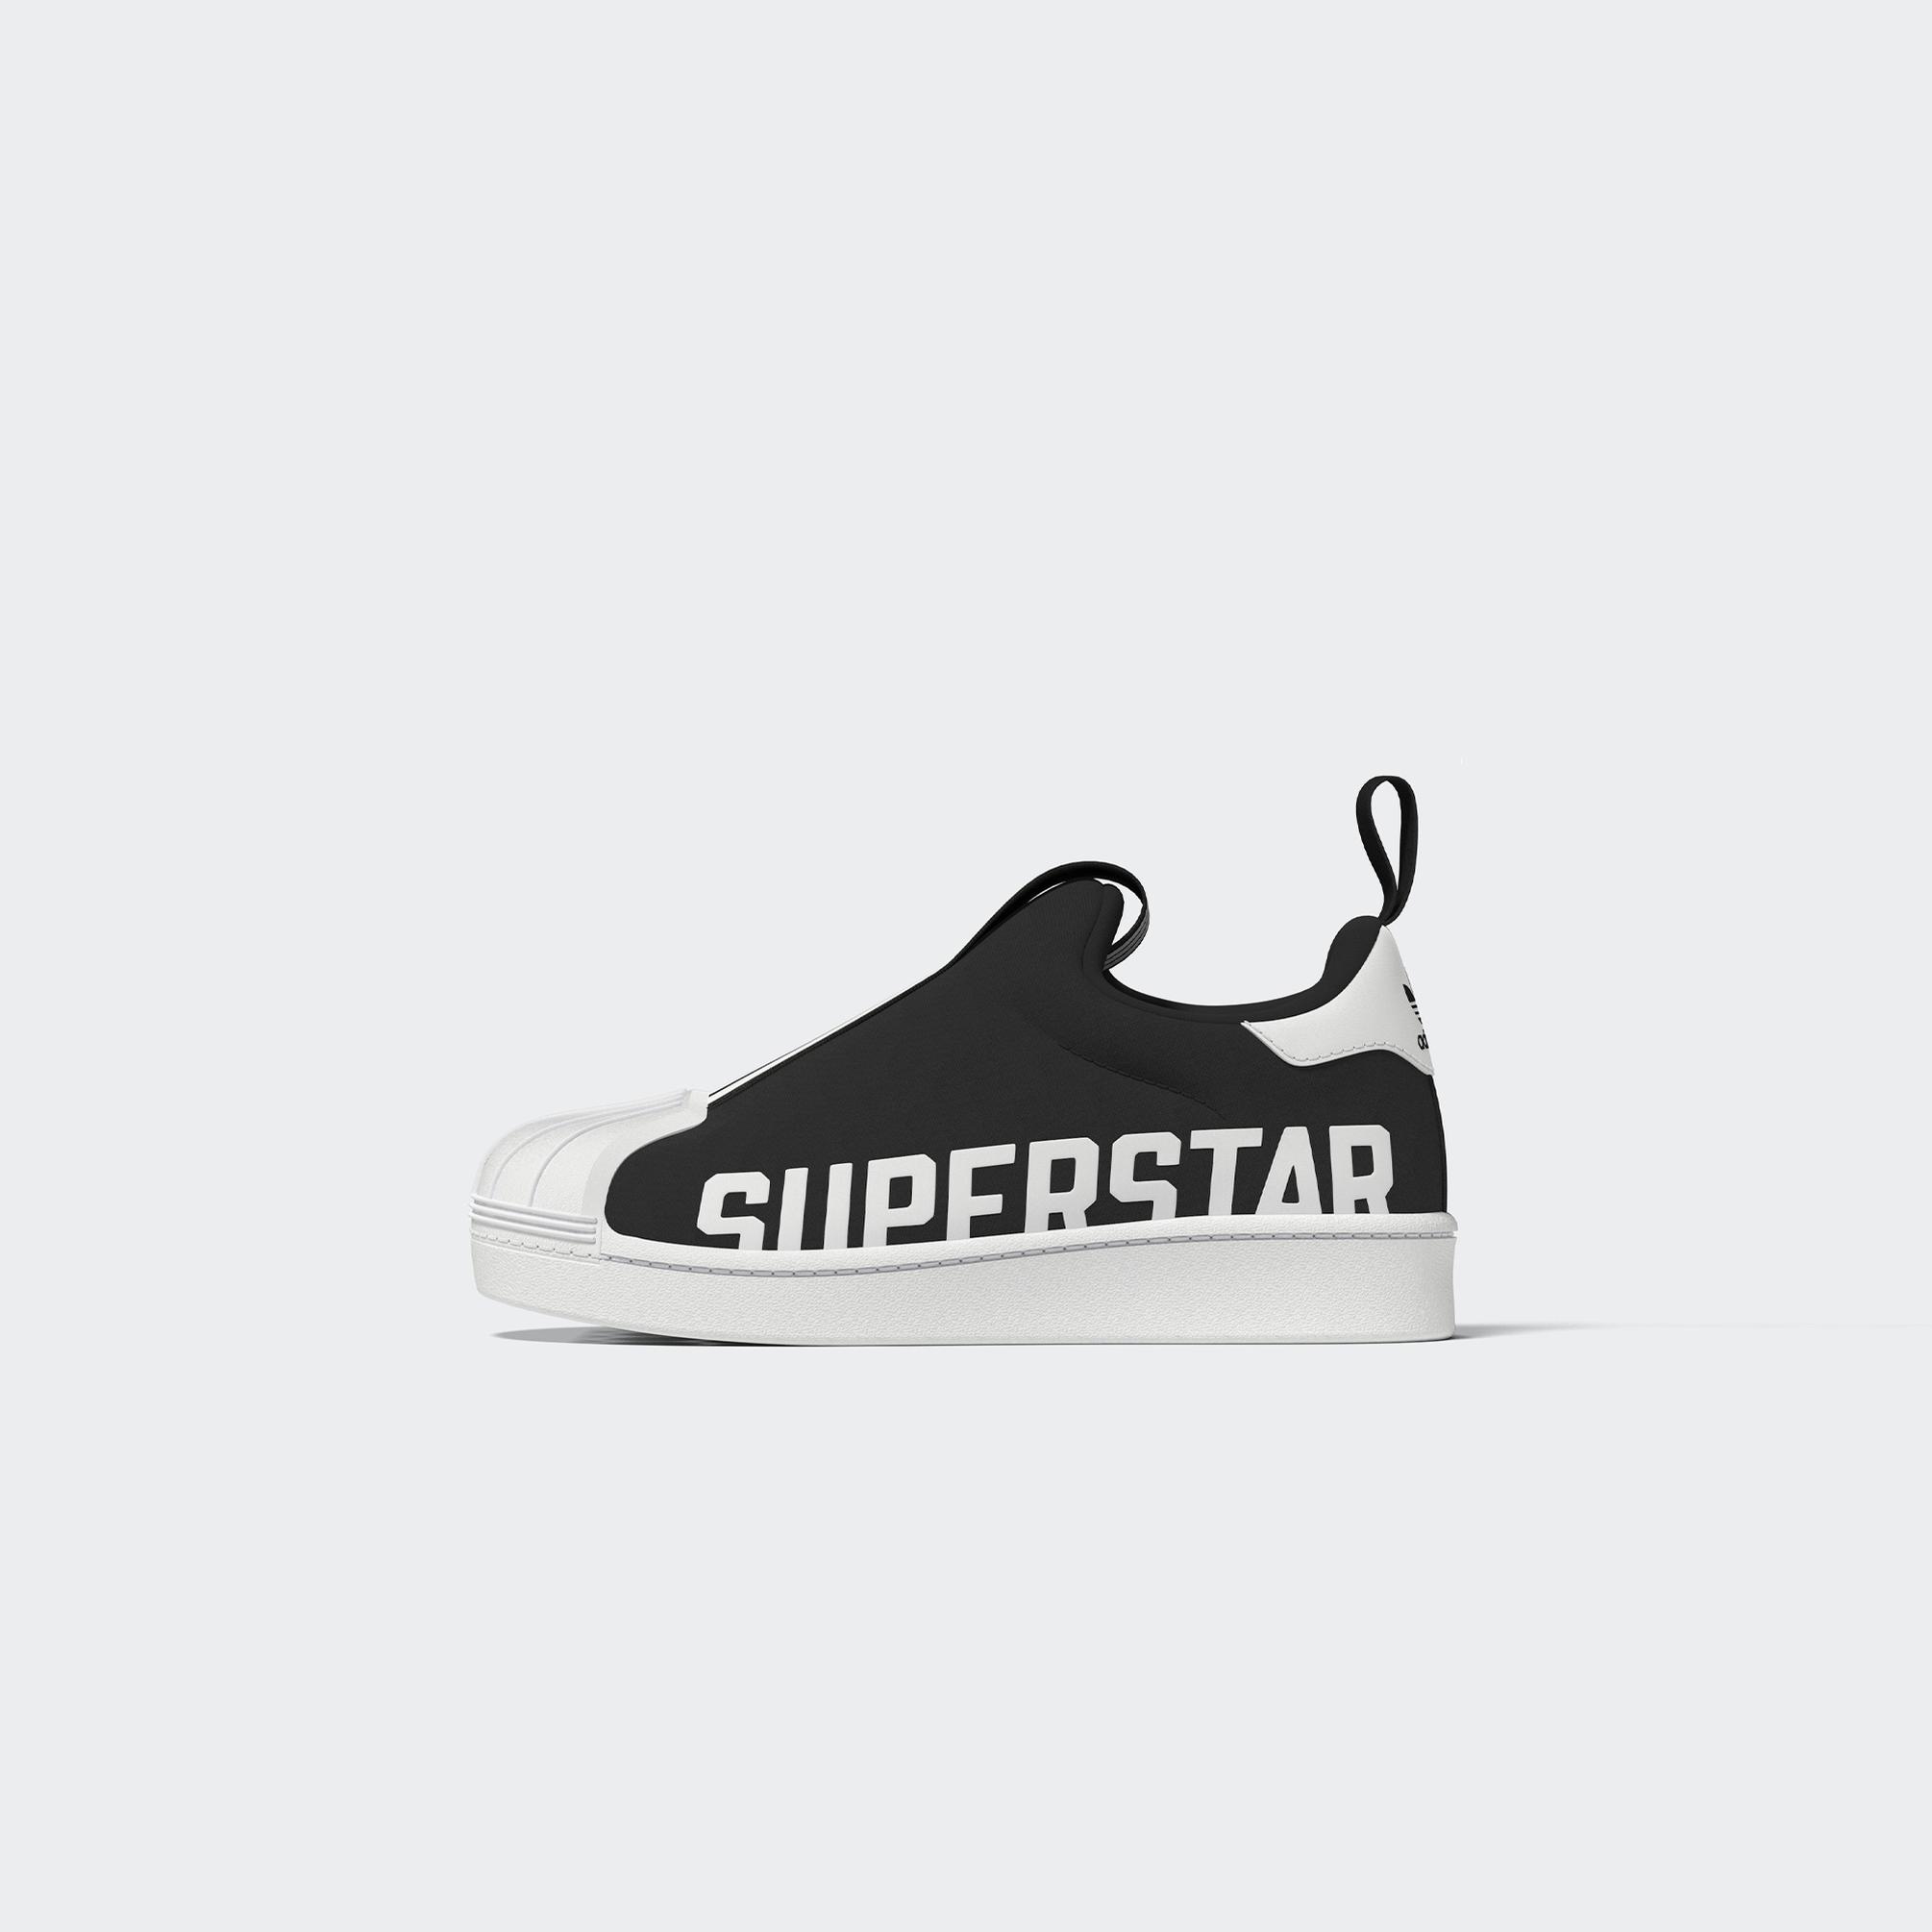  adidas Superstar 360 X Çocuk Siyah Spor Ayakkabı